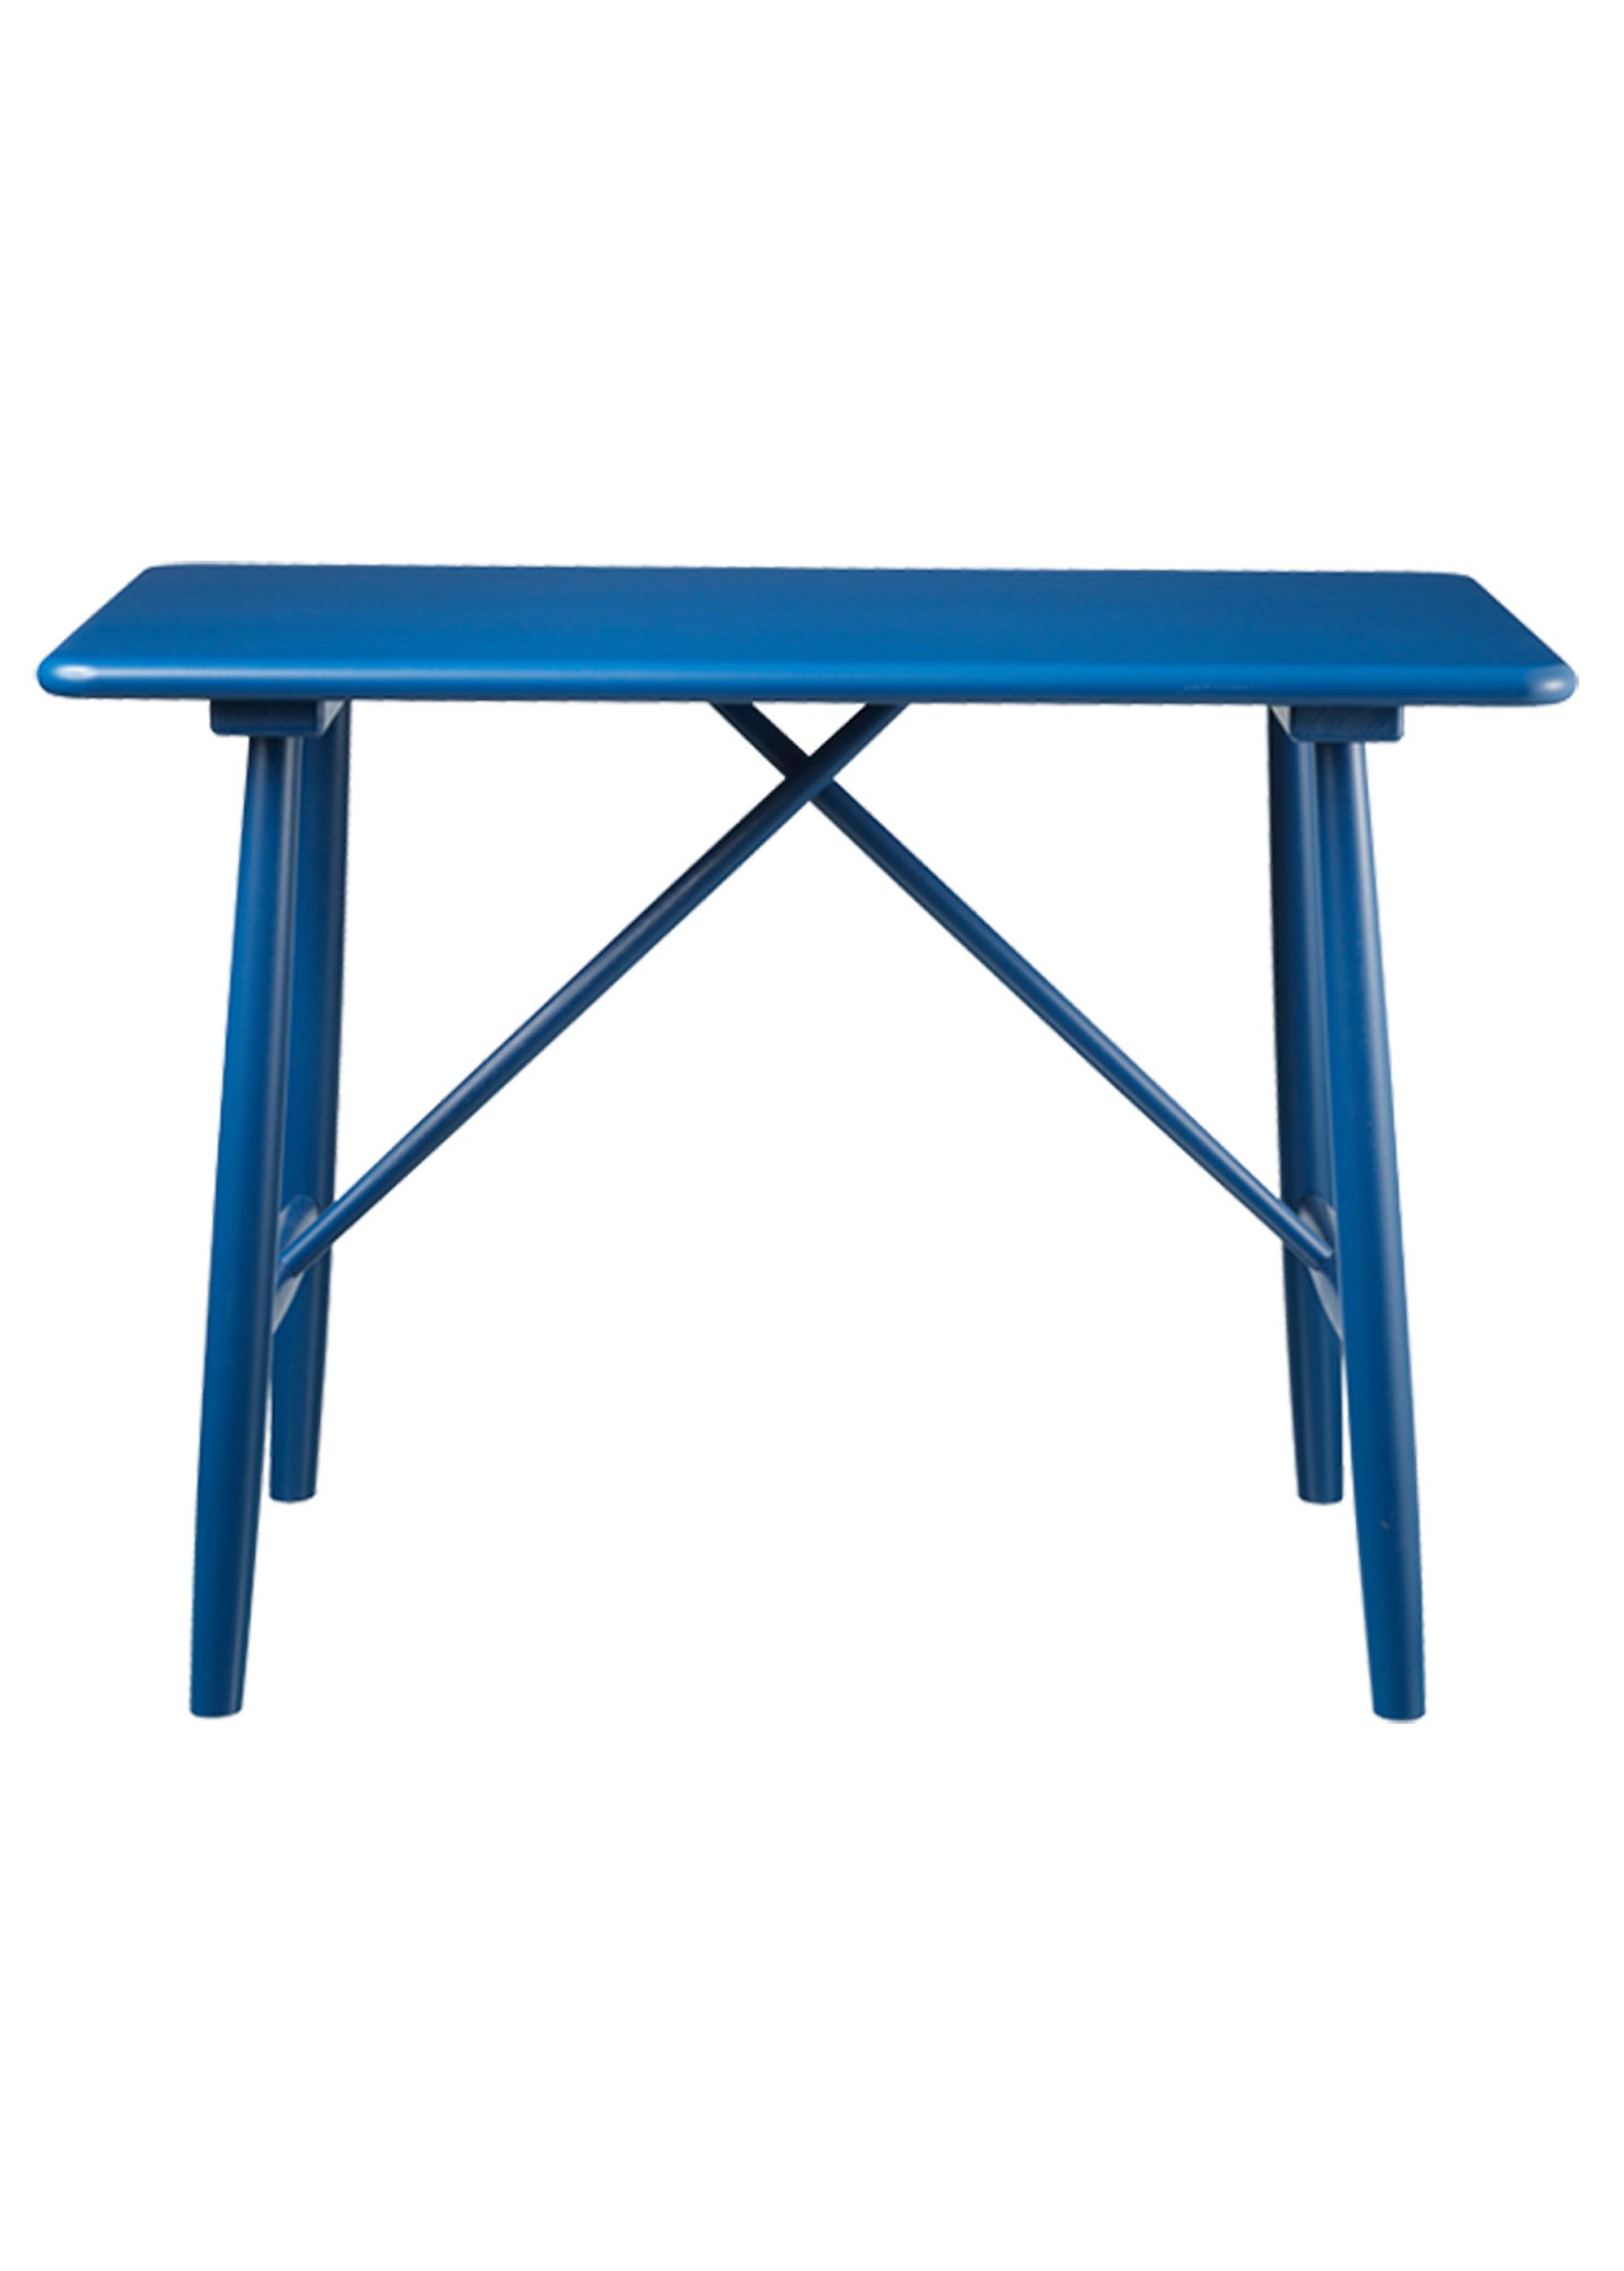 FDB Møbler / Furniture - Table - P10 children table by Børge Mogensen - Birch / Blue